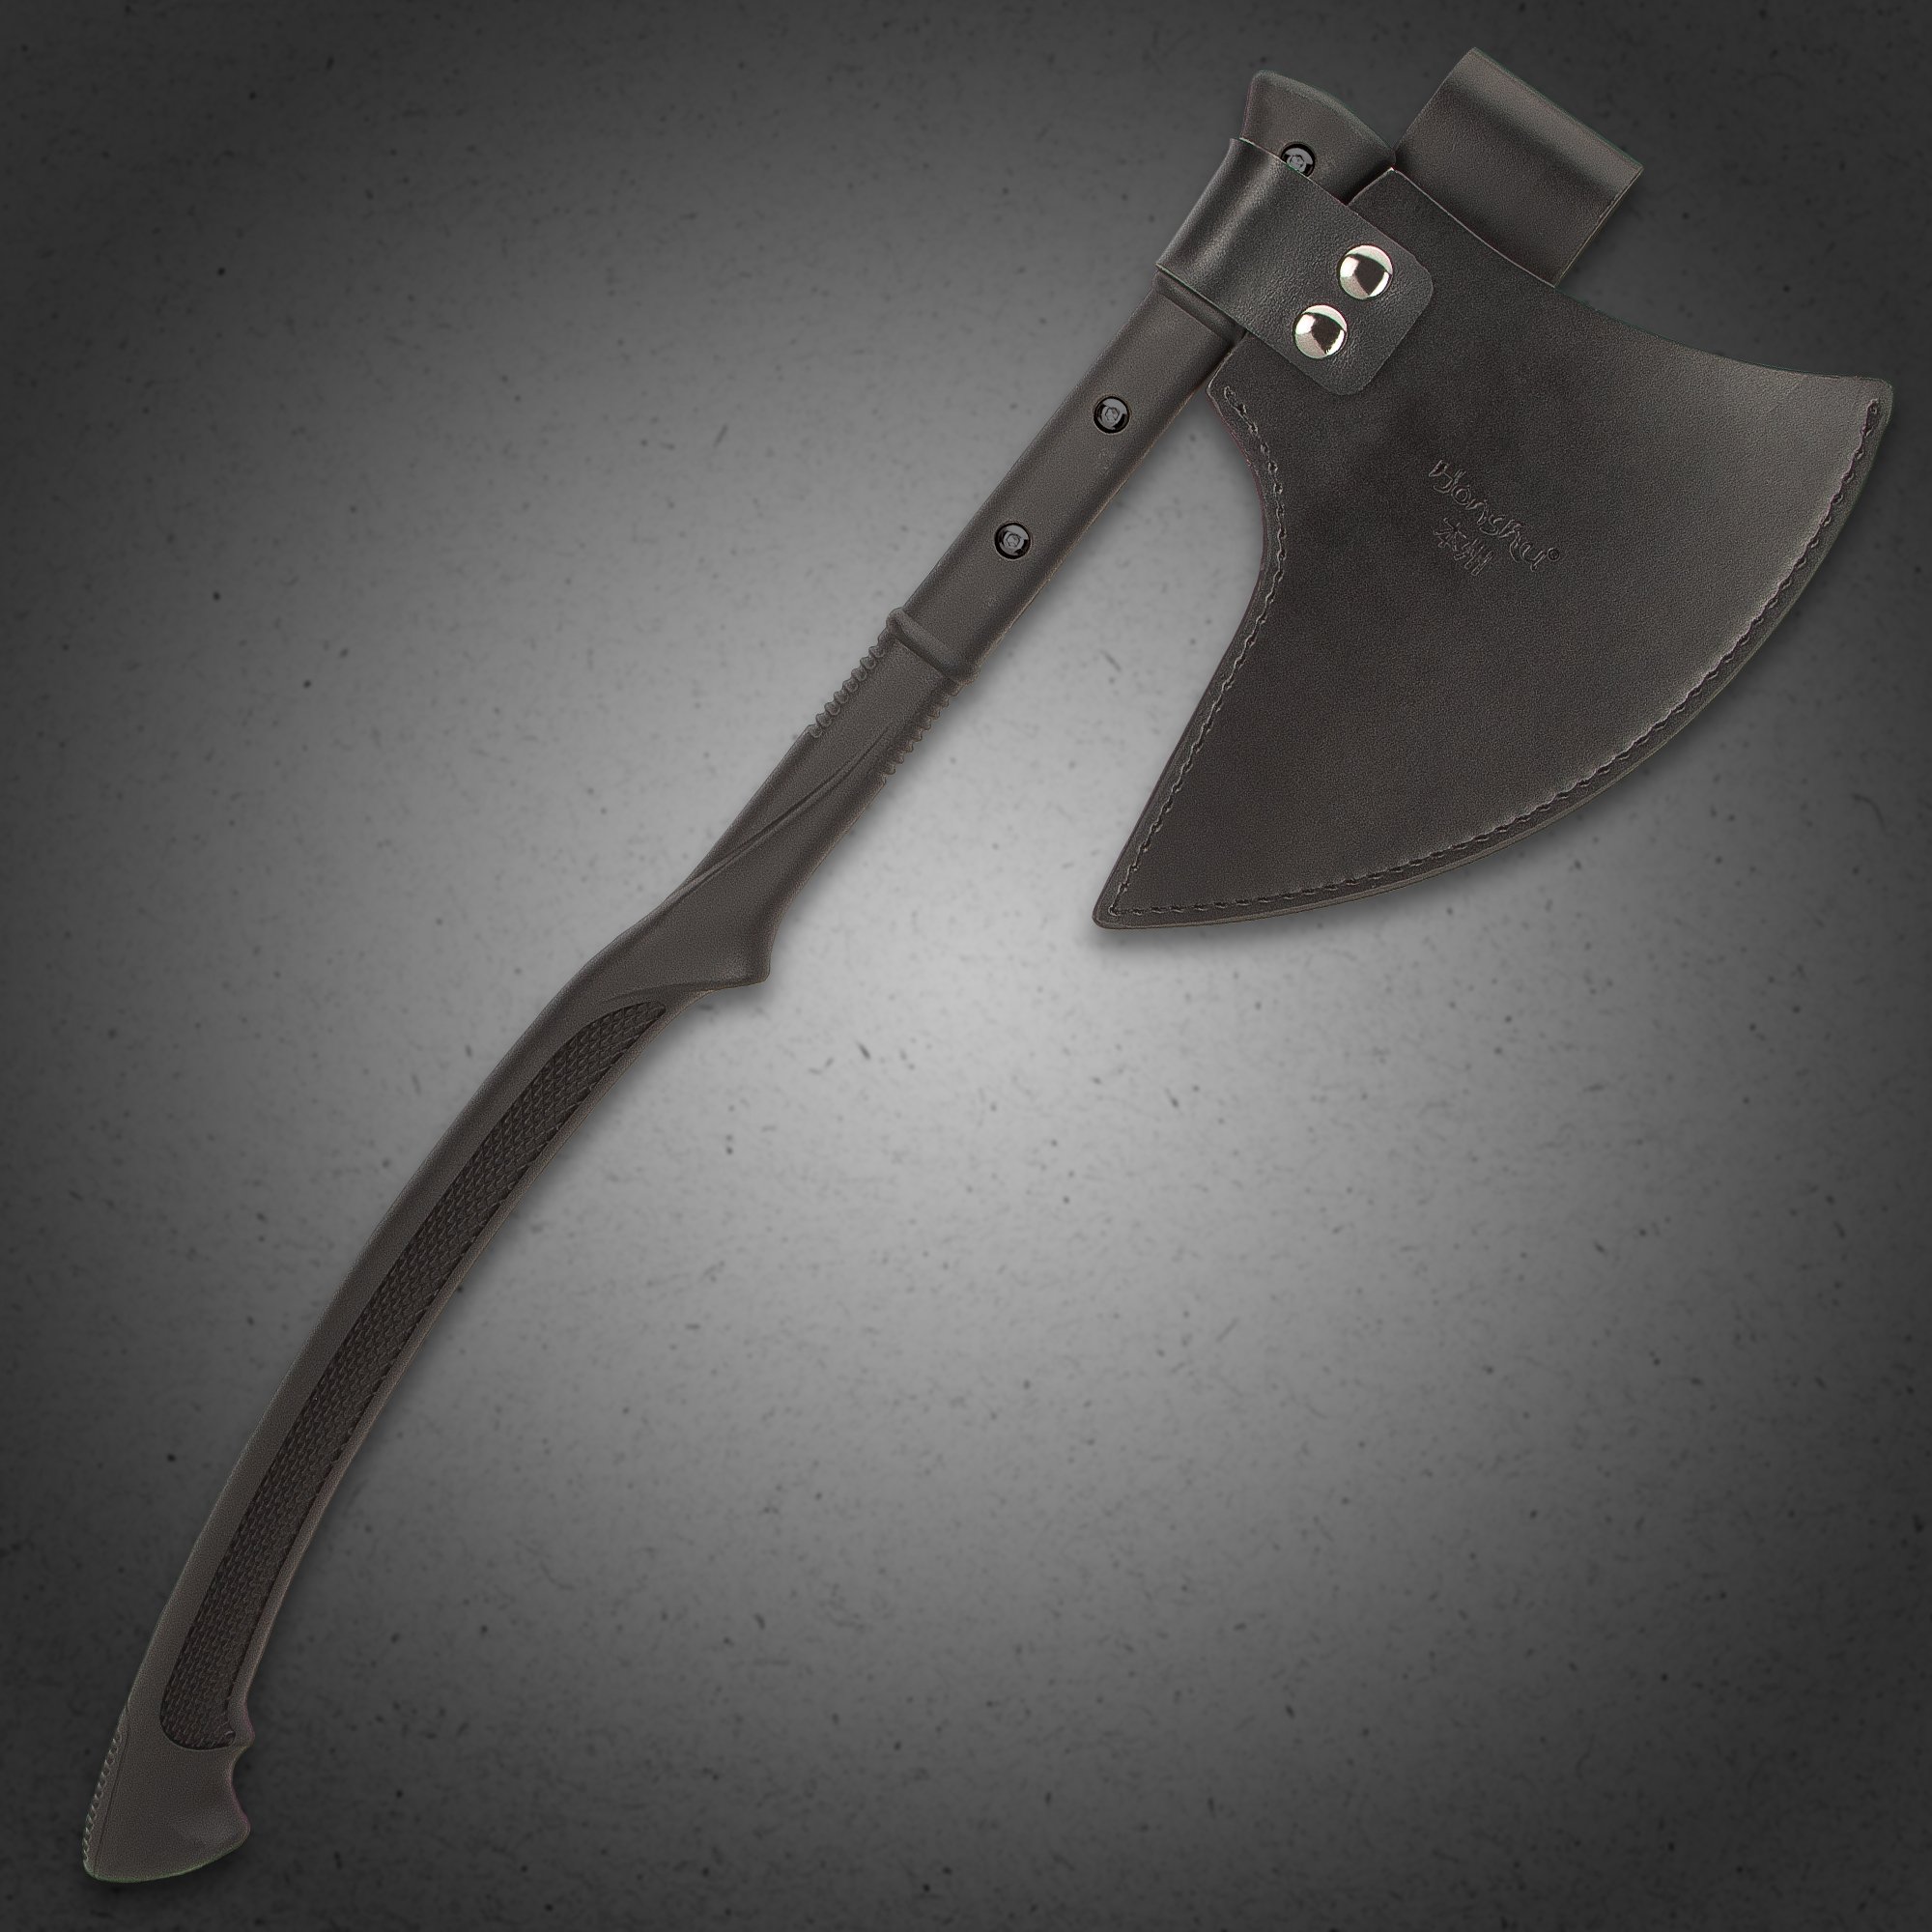 Honshu Karito Battle Axe With Sheath - 7Cr13 Stainless Steel Blade